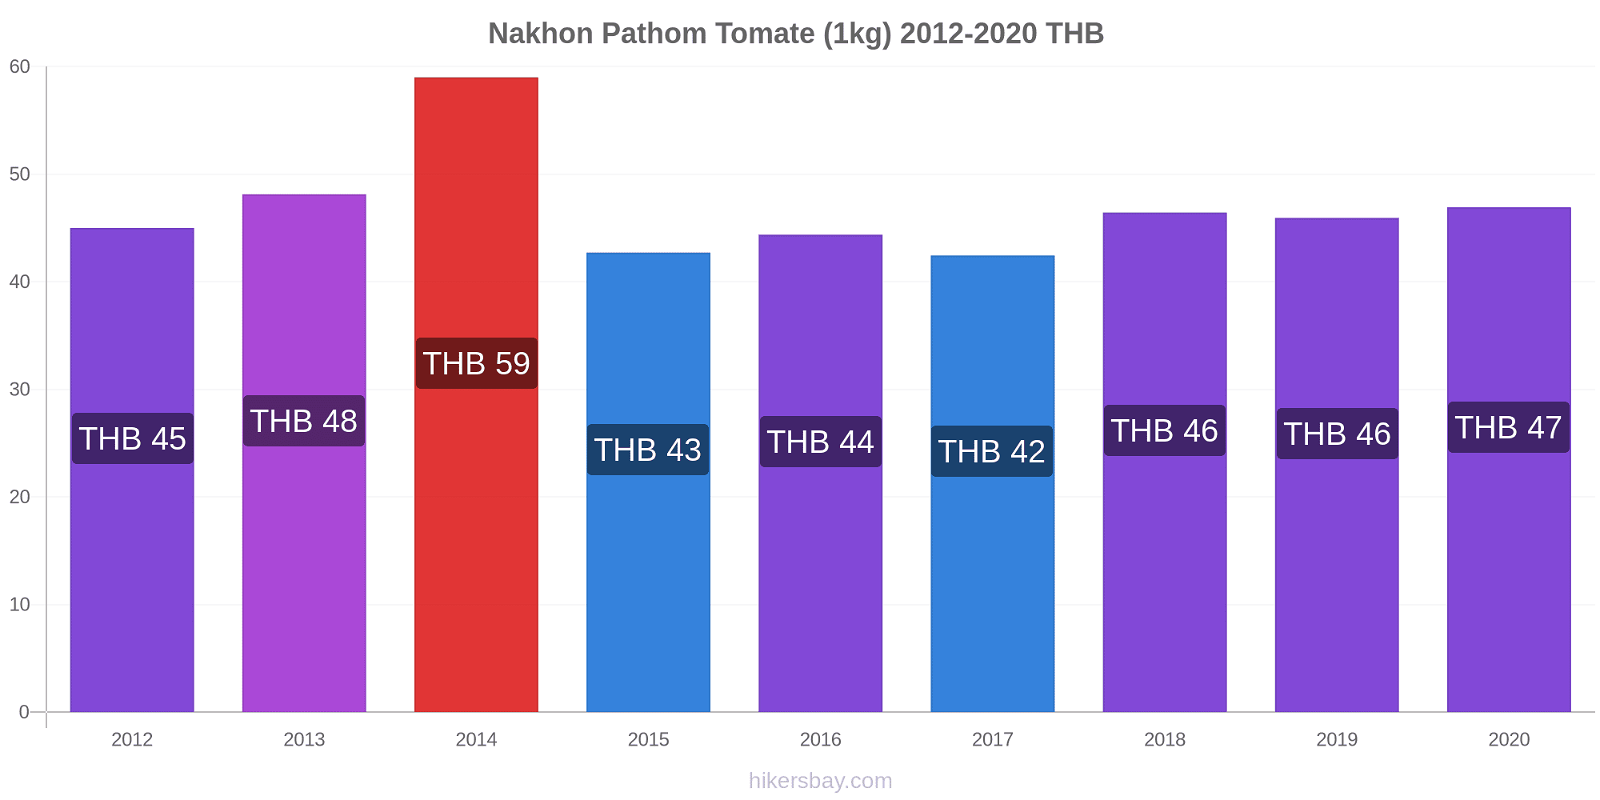 Nakhon Pathom cambios de precios Tomate (1kg) hikersbay.com